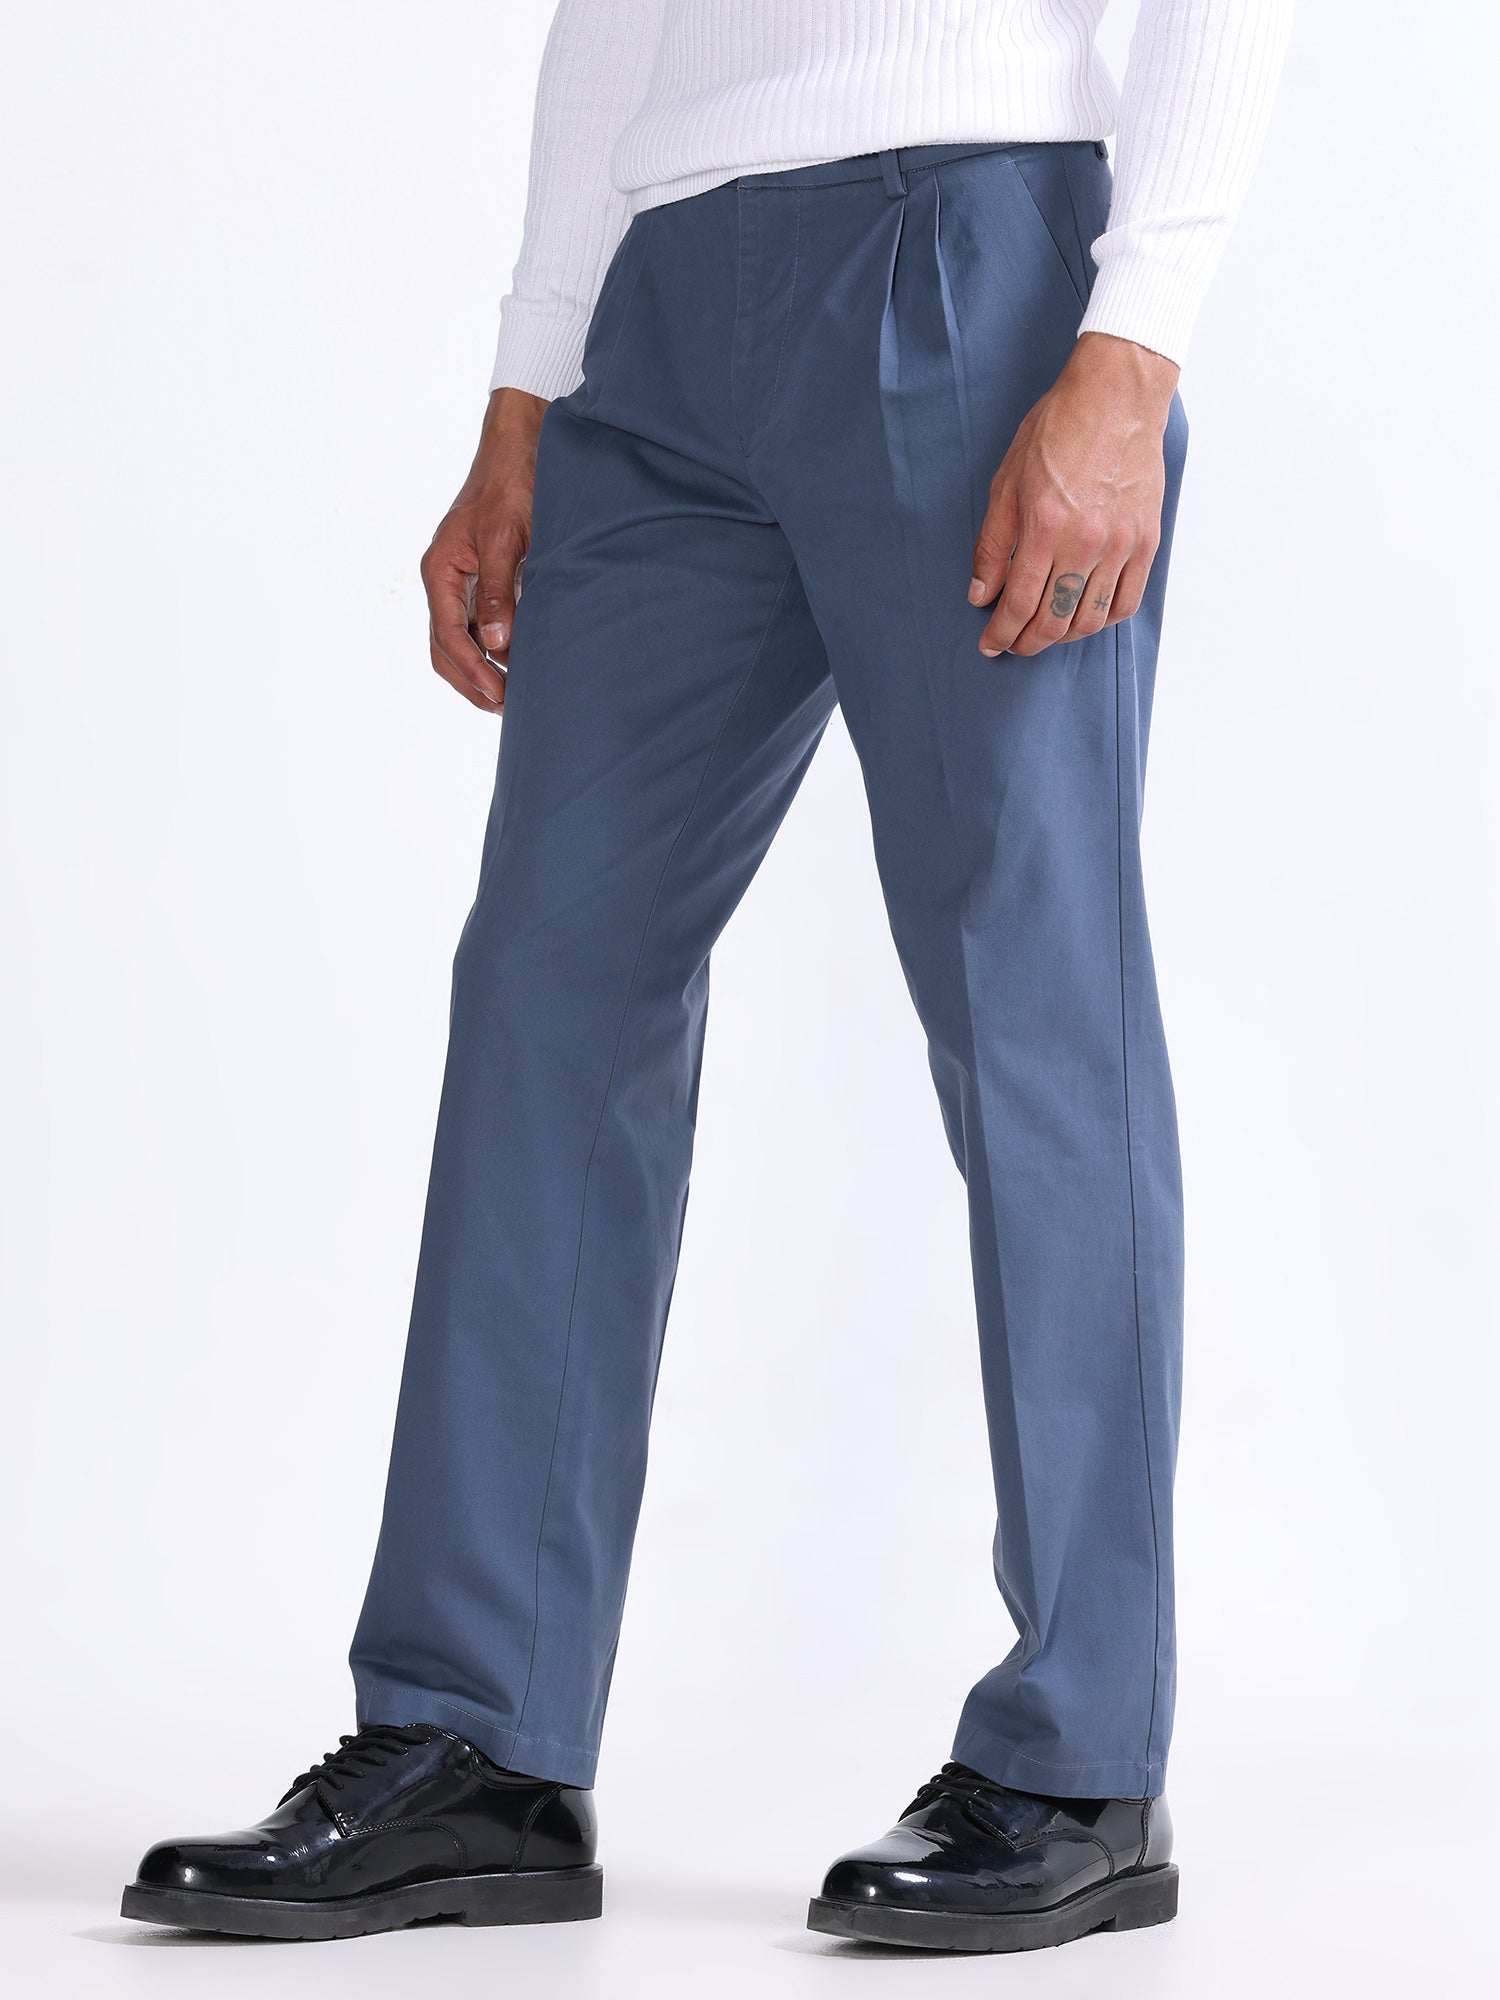 Jade Blue Trousers - Buy Jade Blue Trousers online in India